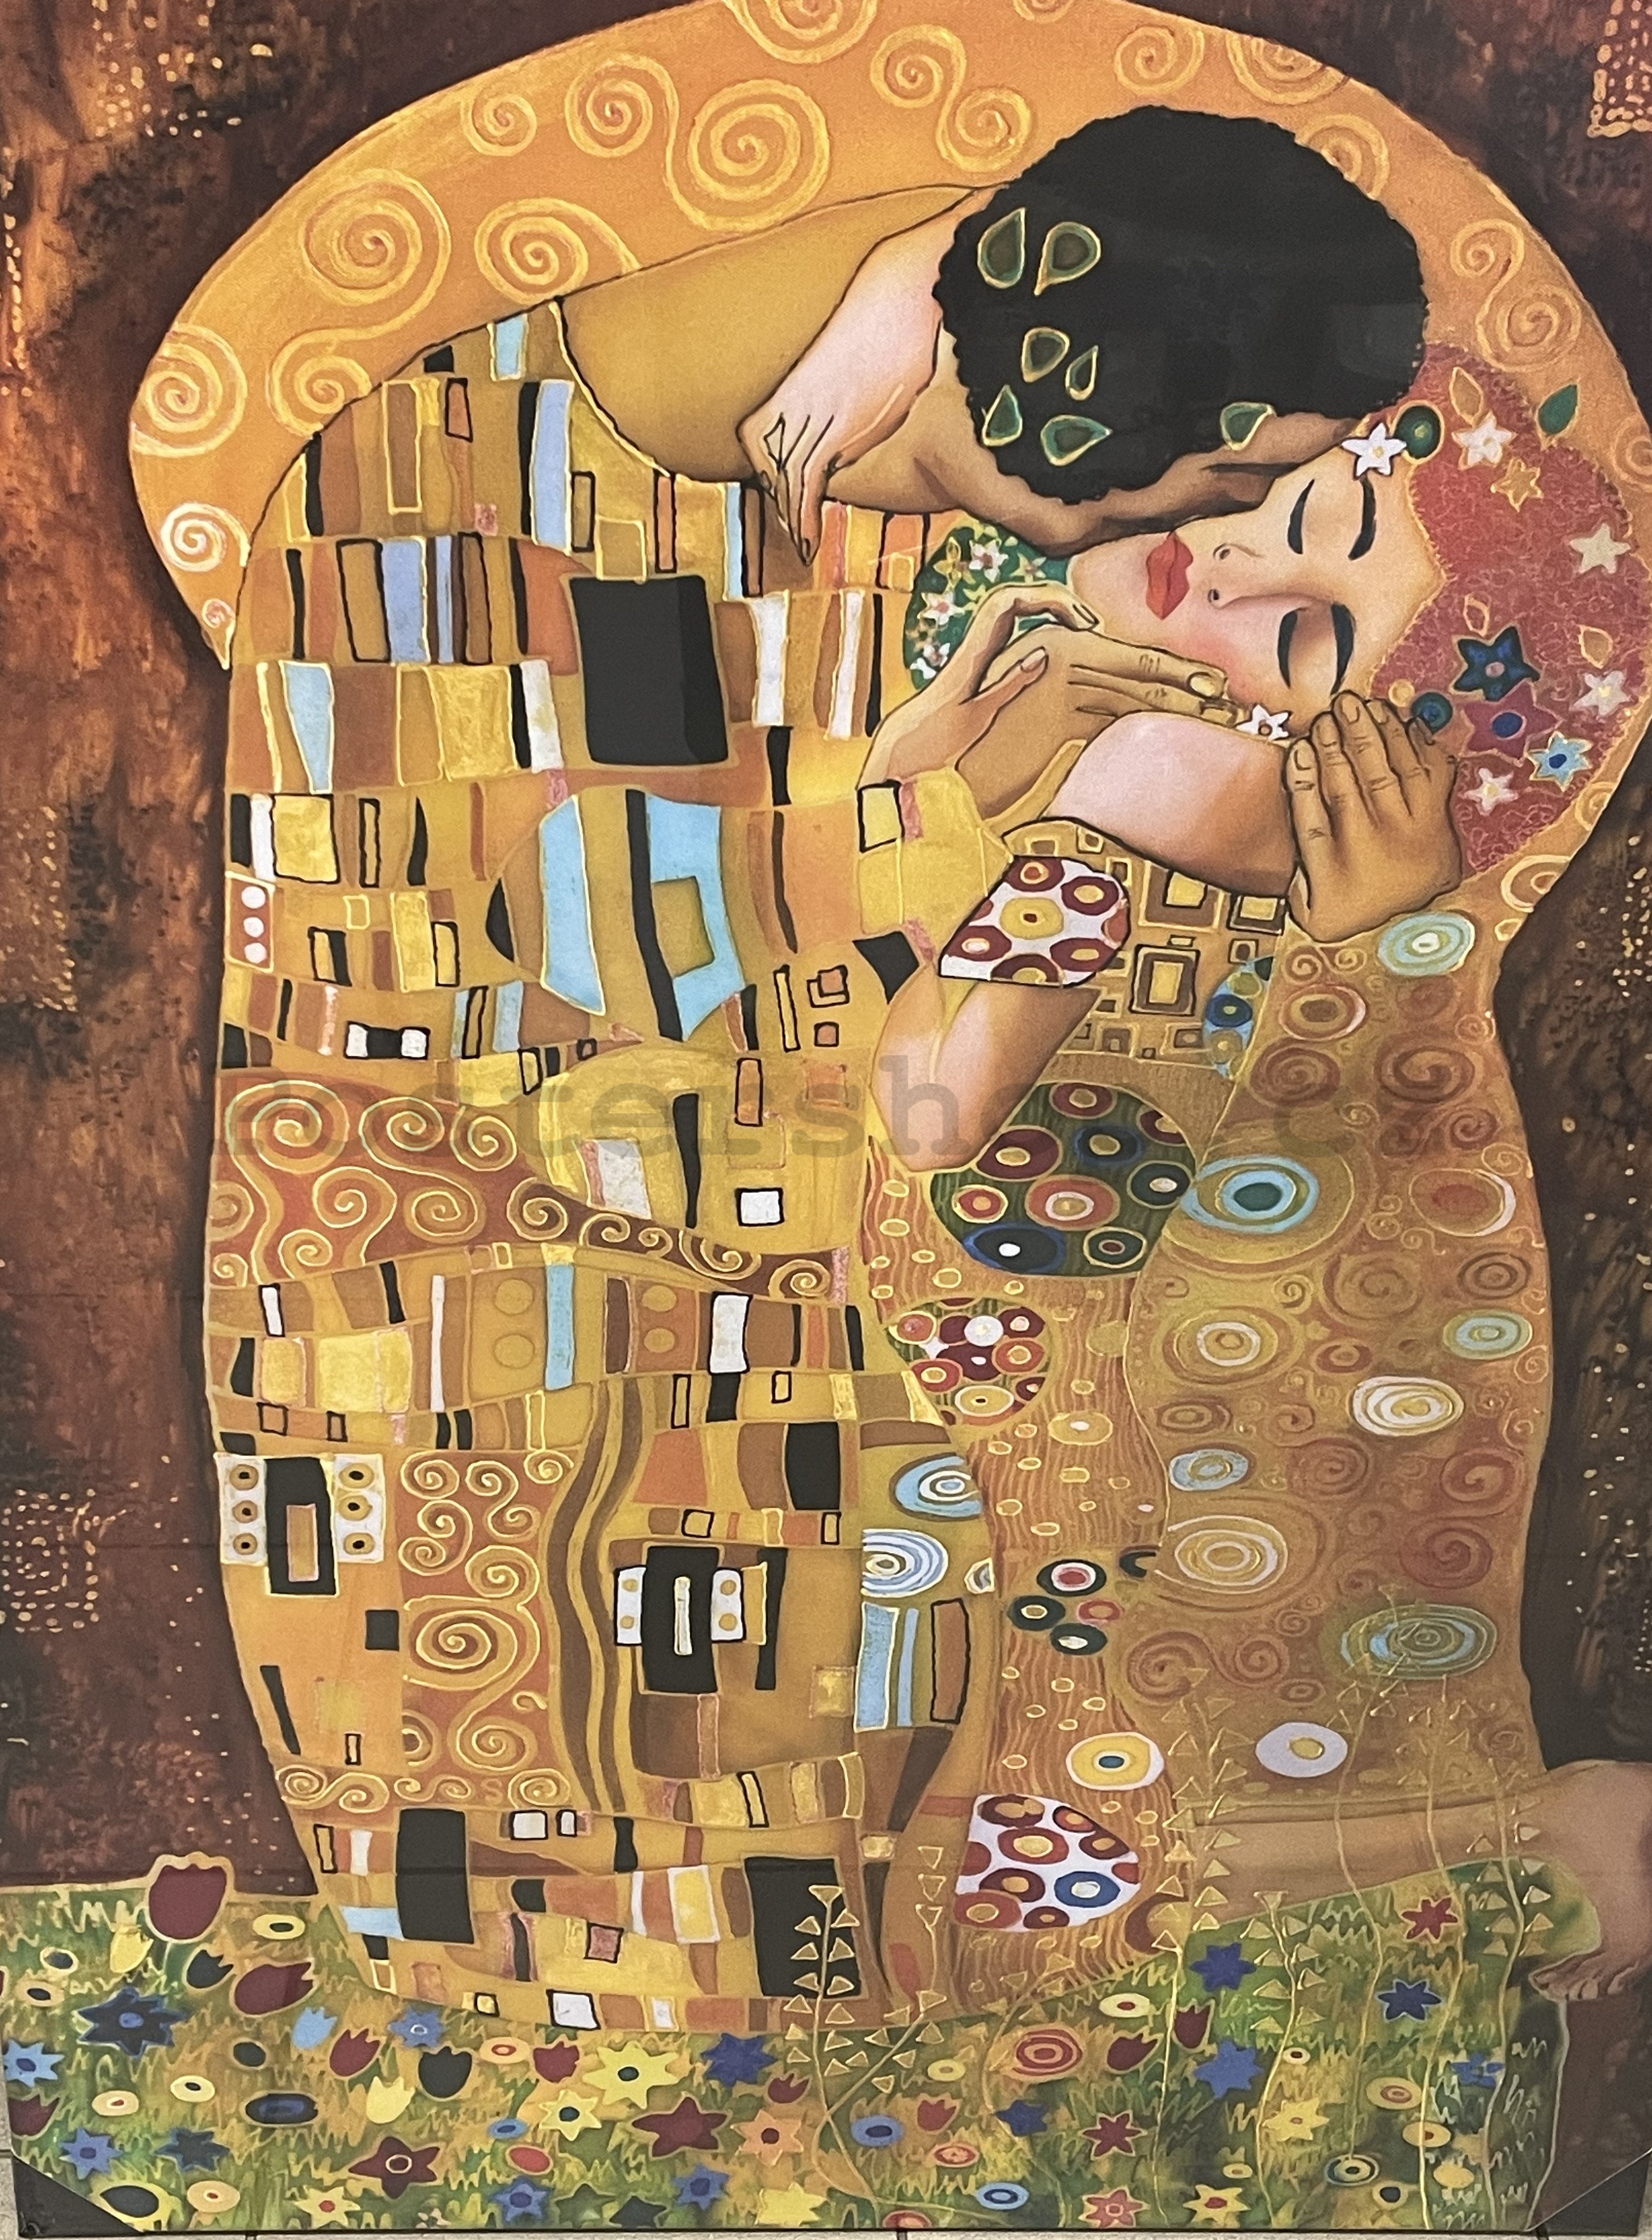 Obraz na plátně: Polibek, Gustav Klimt - 75x100 cm